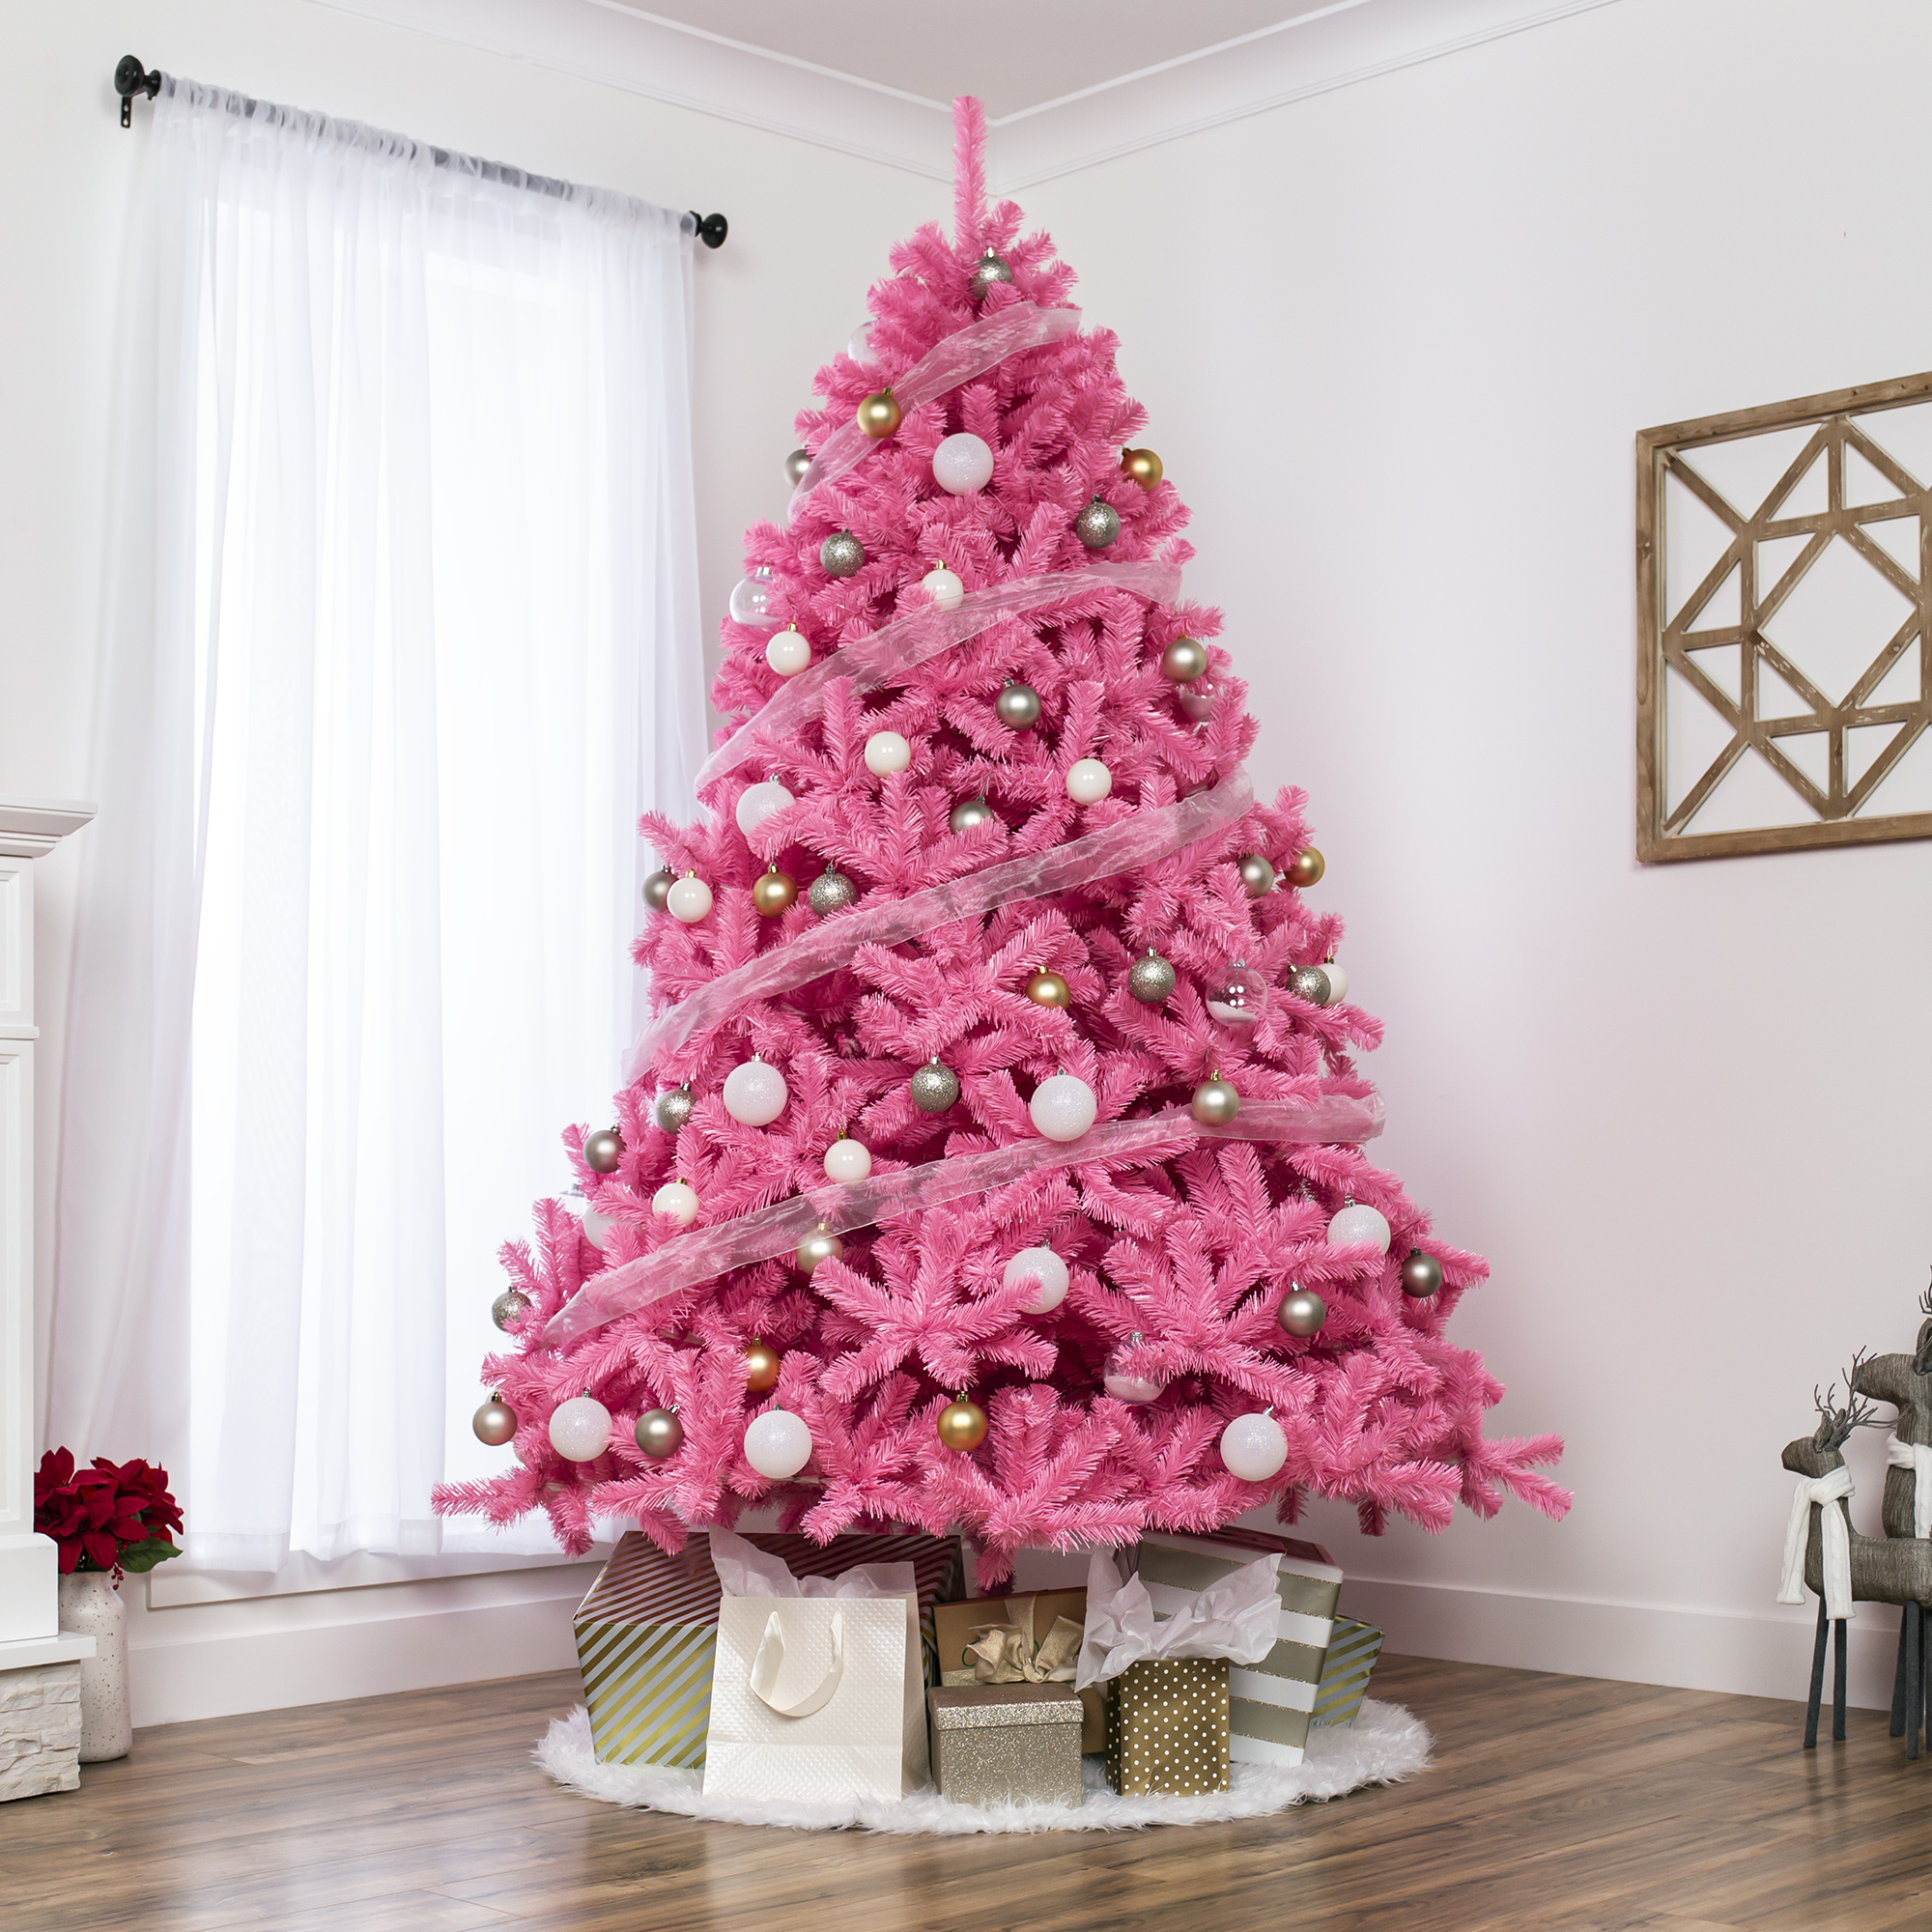 Christmas-tree 50+ Top Christmas Tree Decoration Ideas